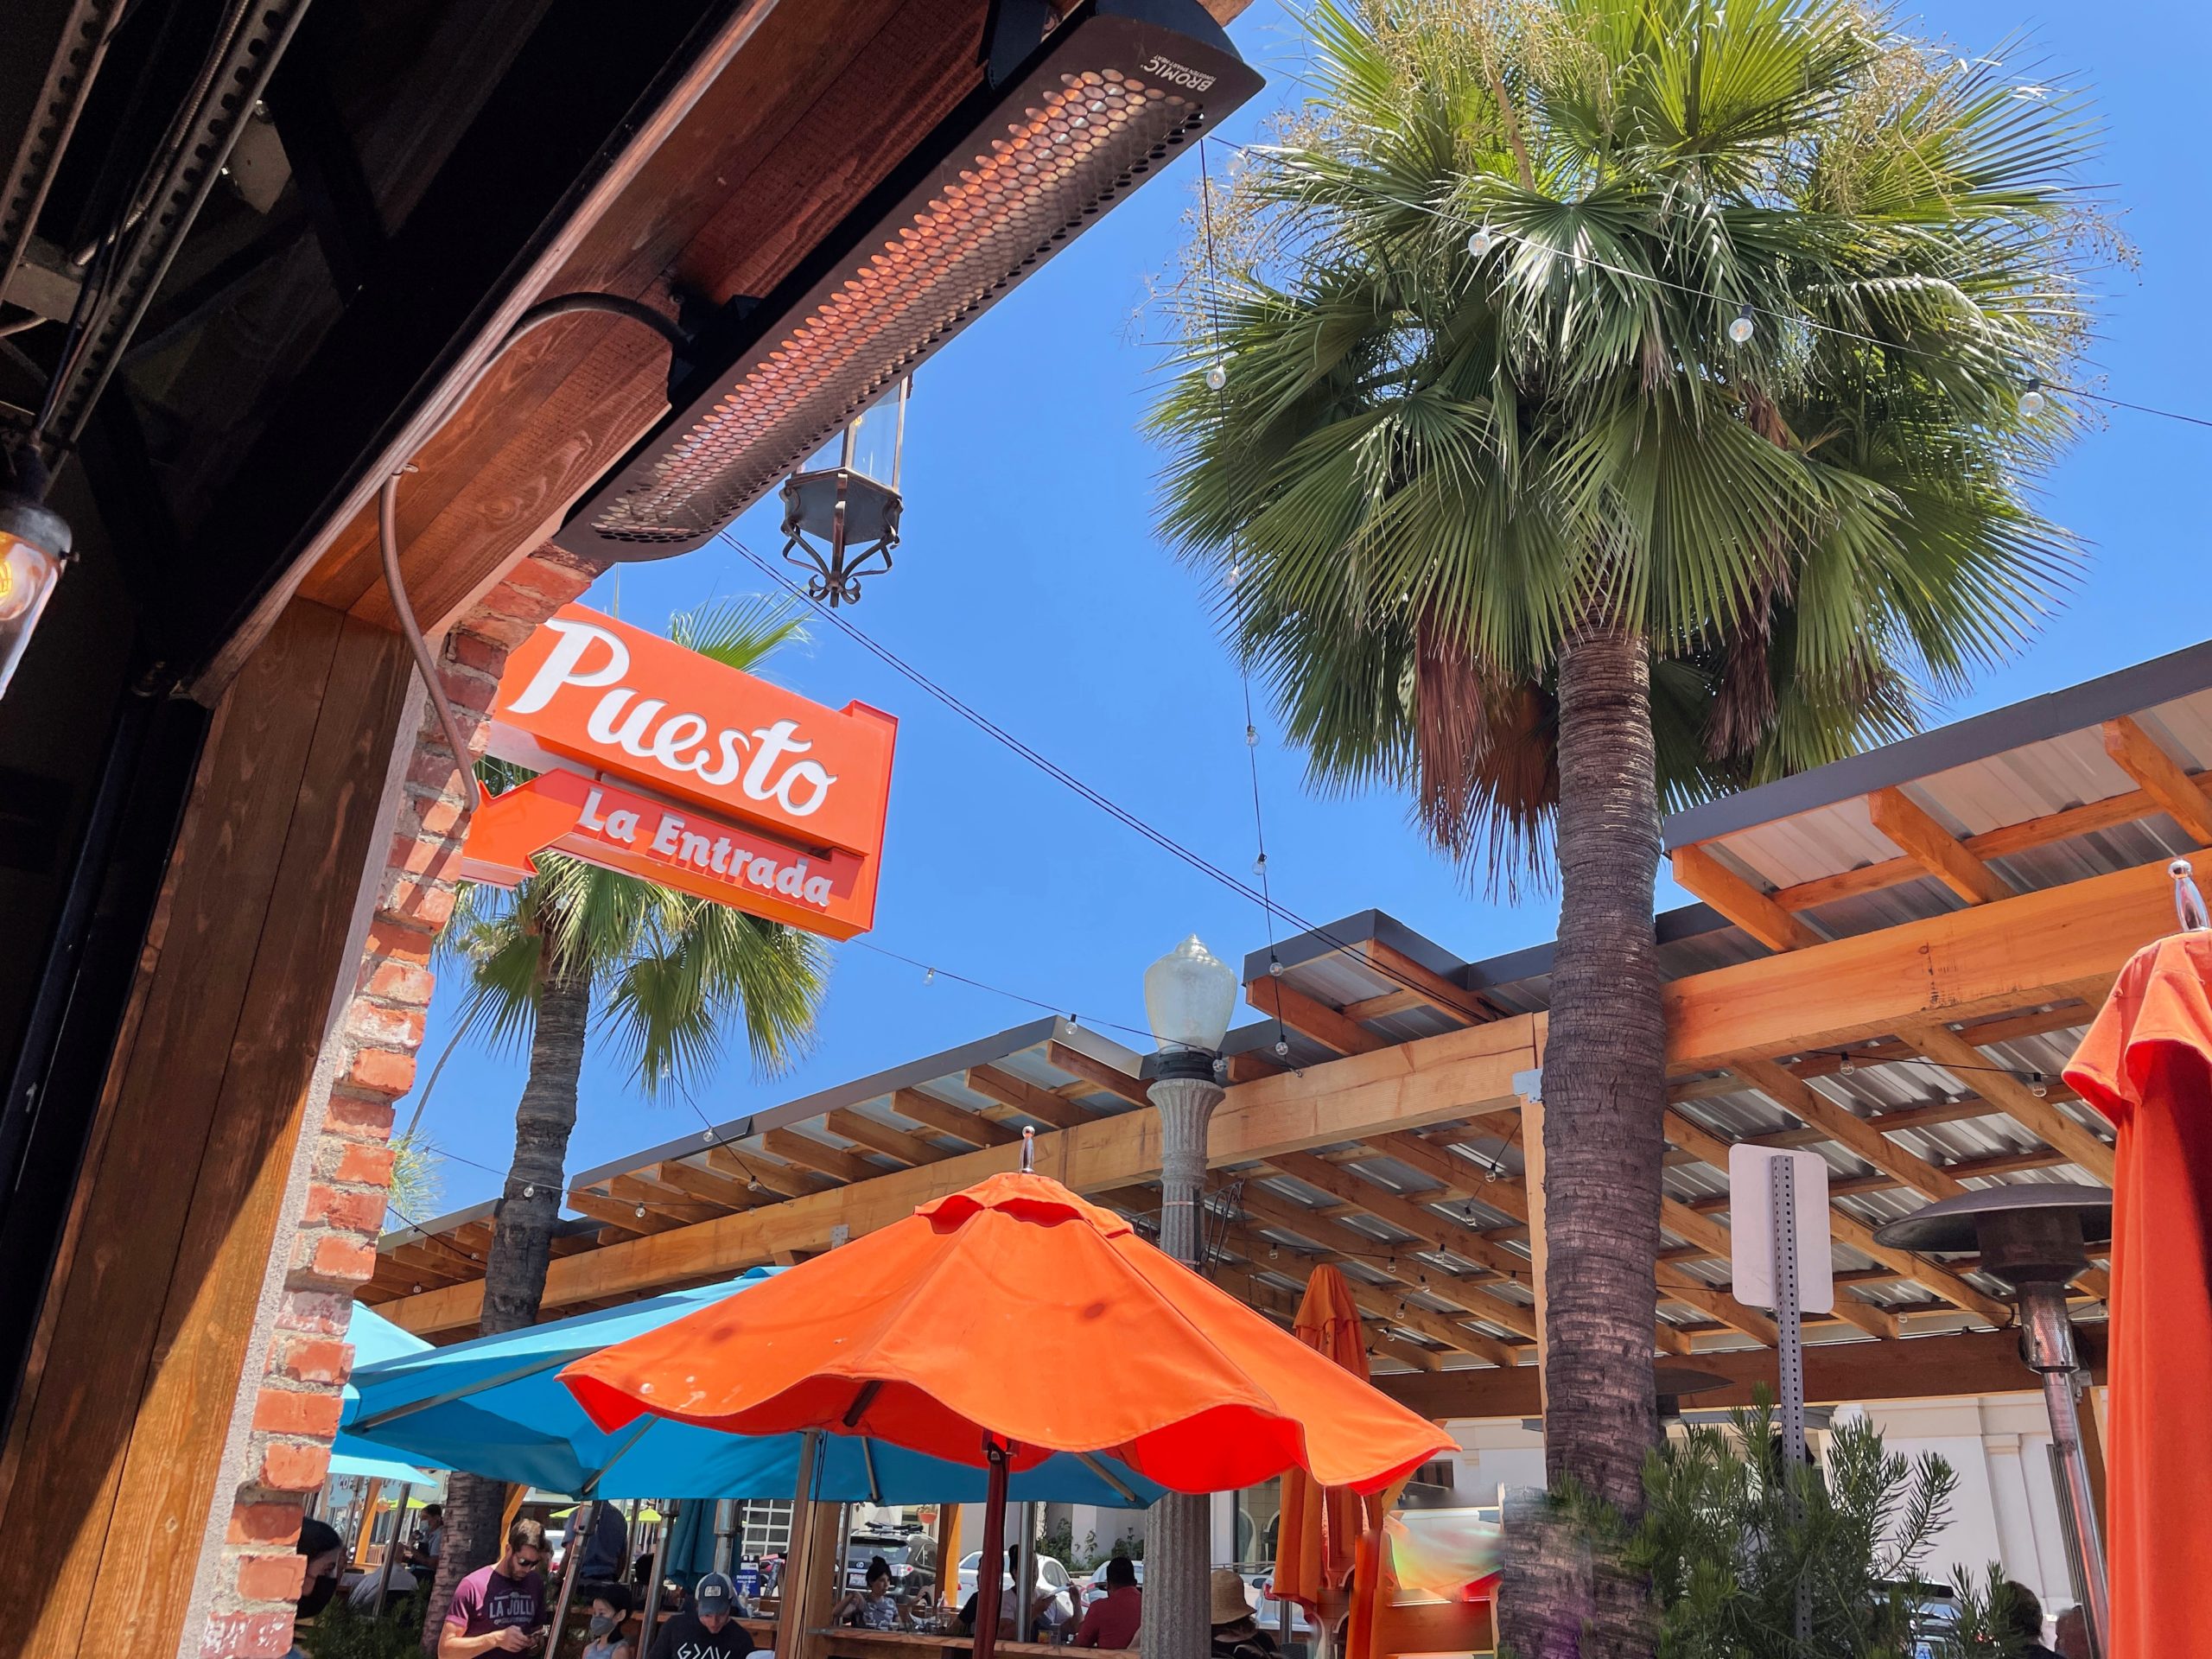 Puesto San Diego Mexican restaurant la jolla location sign with palm tree